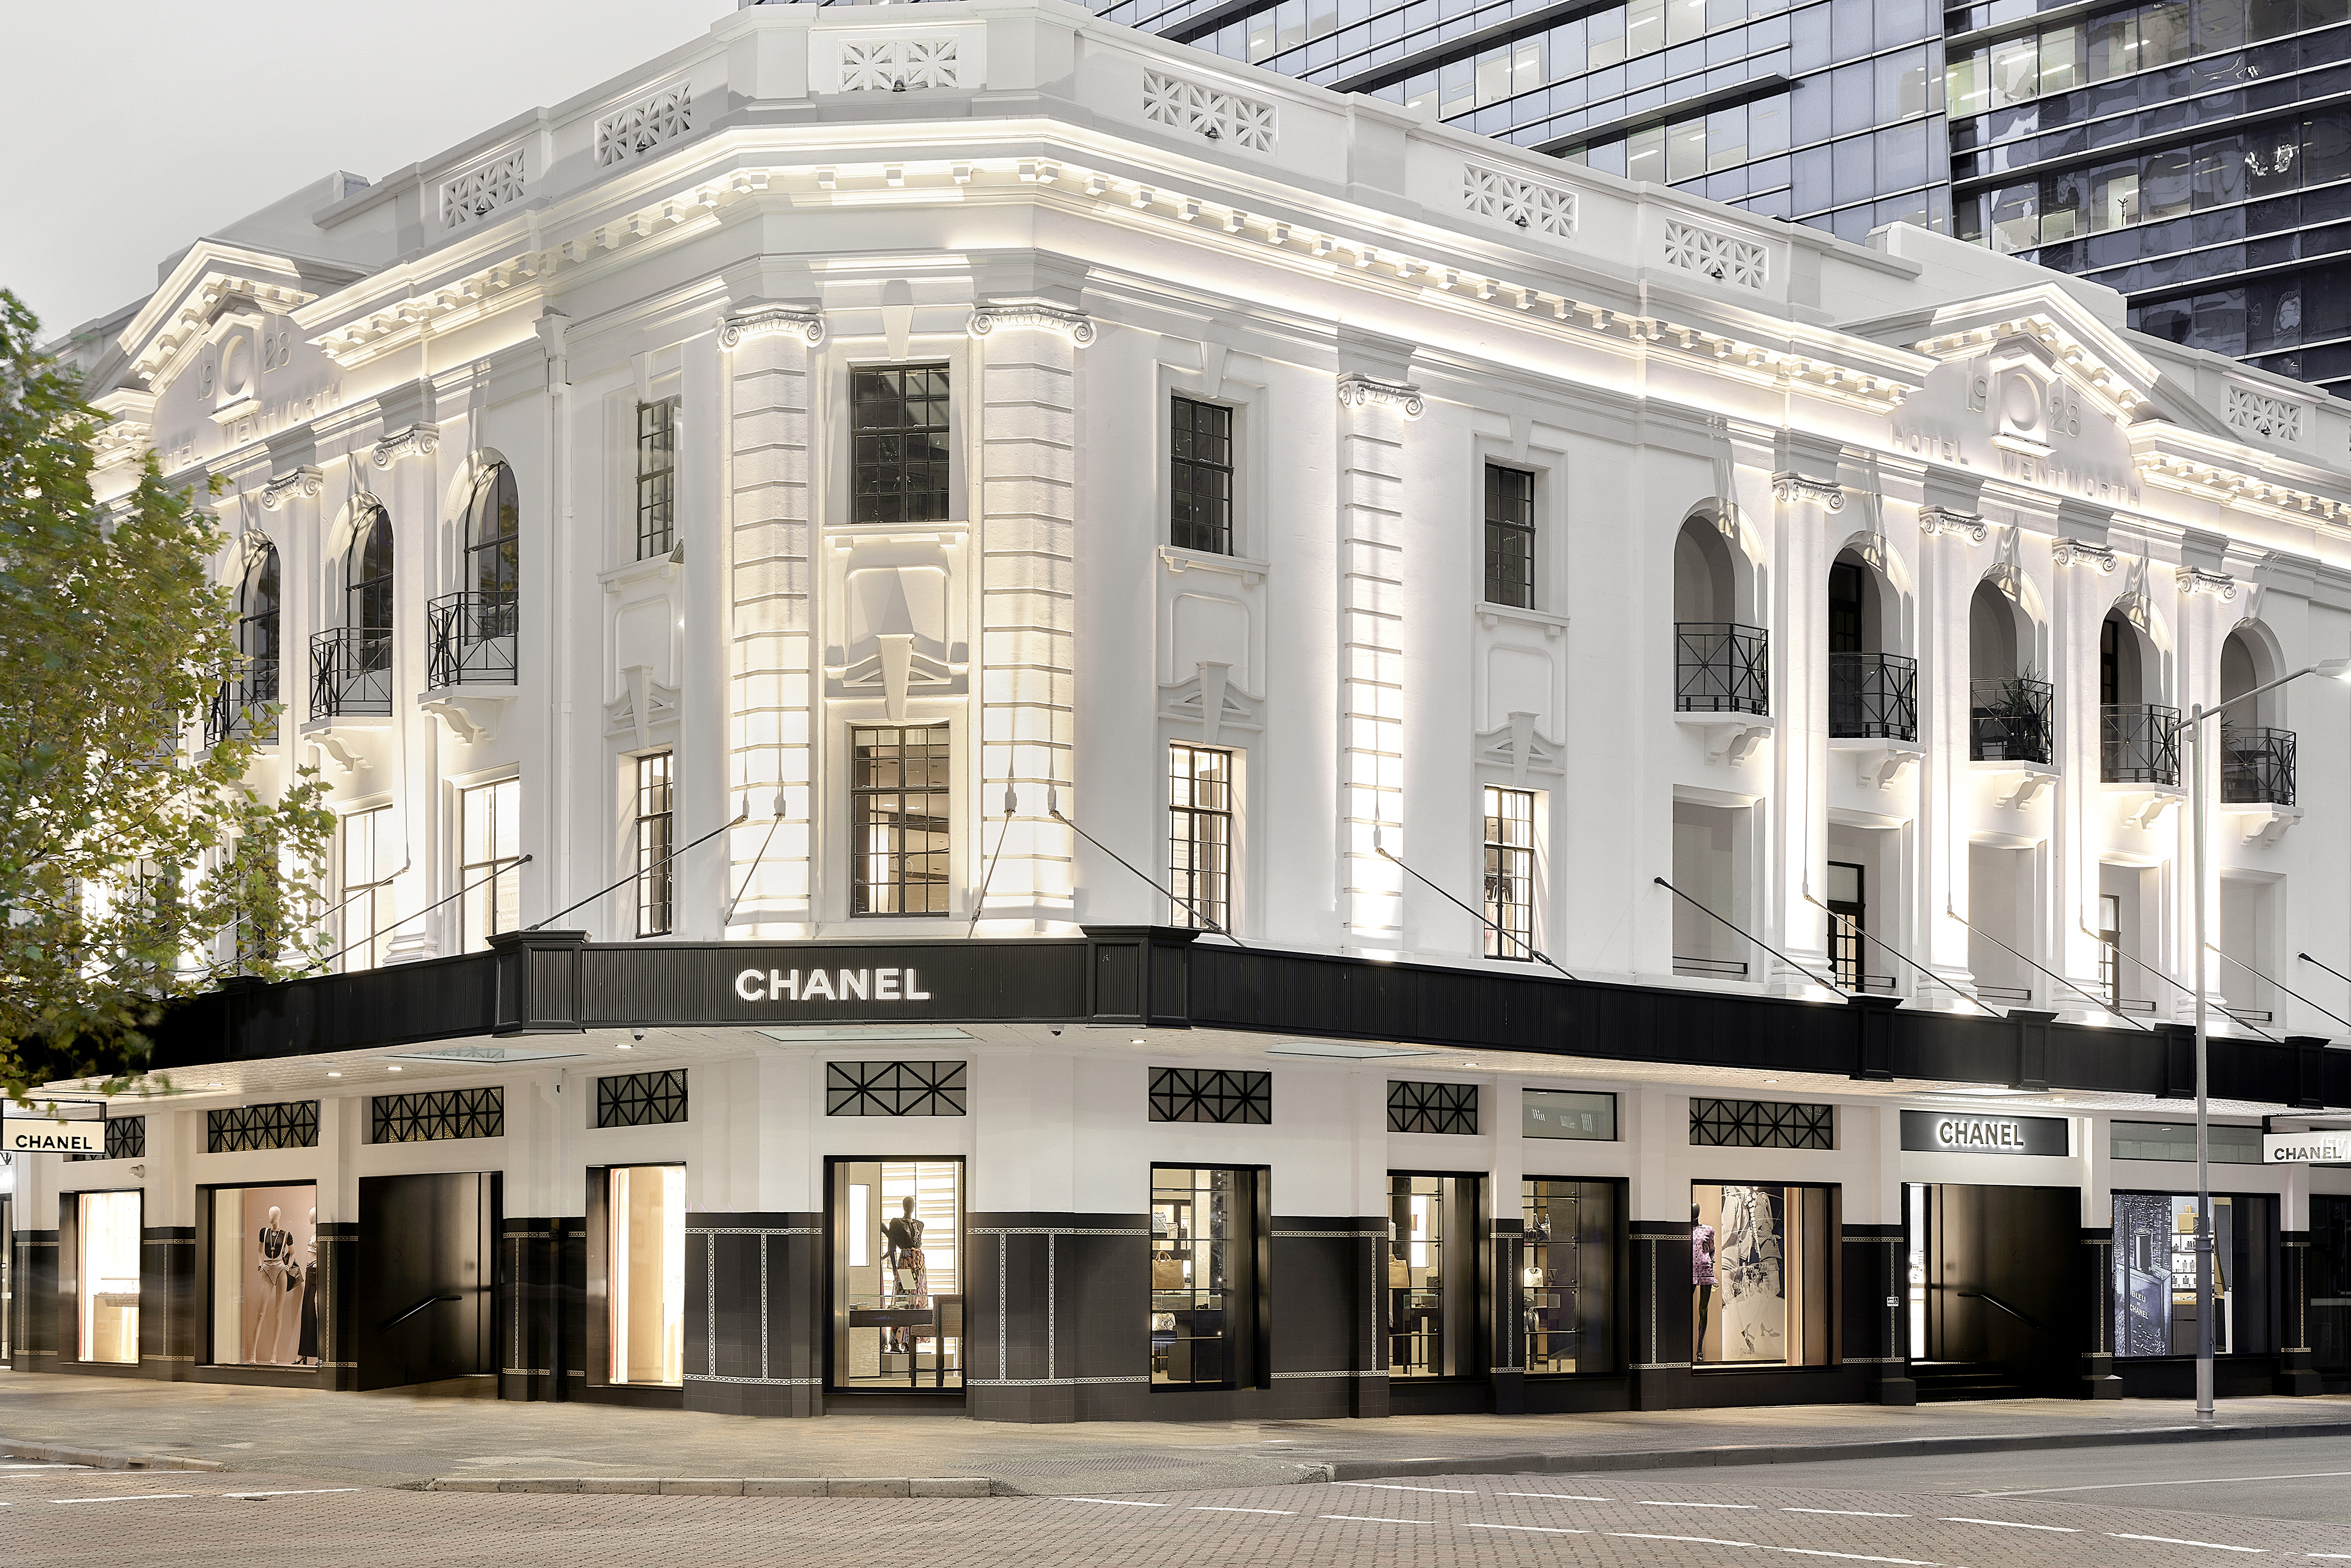 Luxury fashion house Louis Vuitton to open Raine Square store